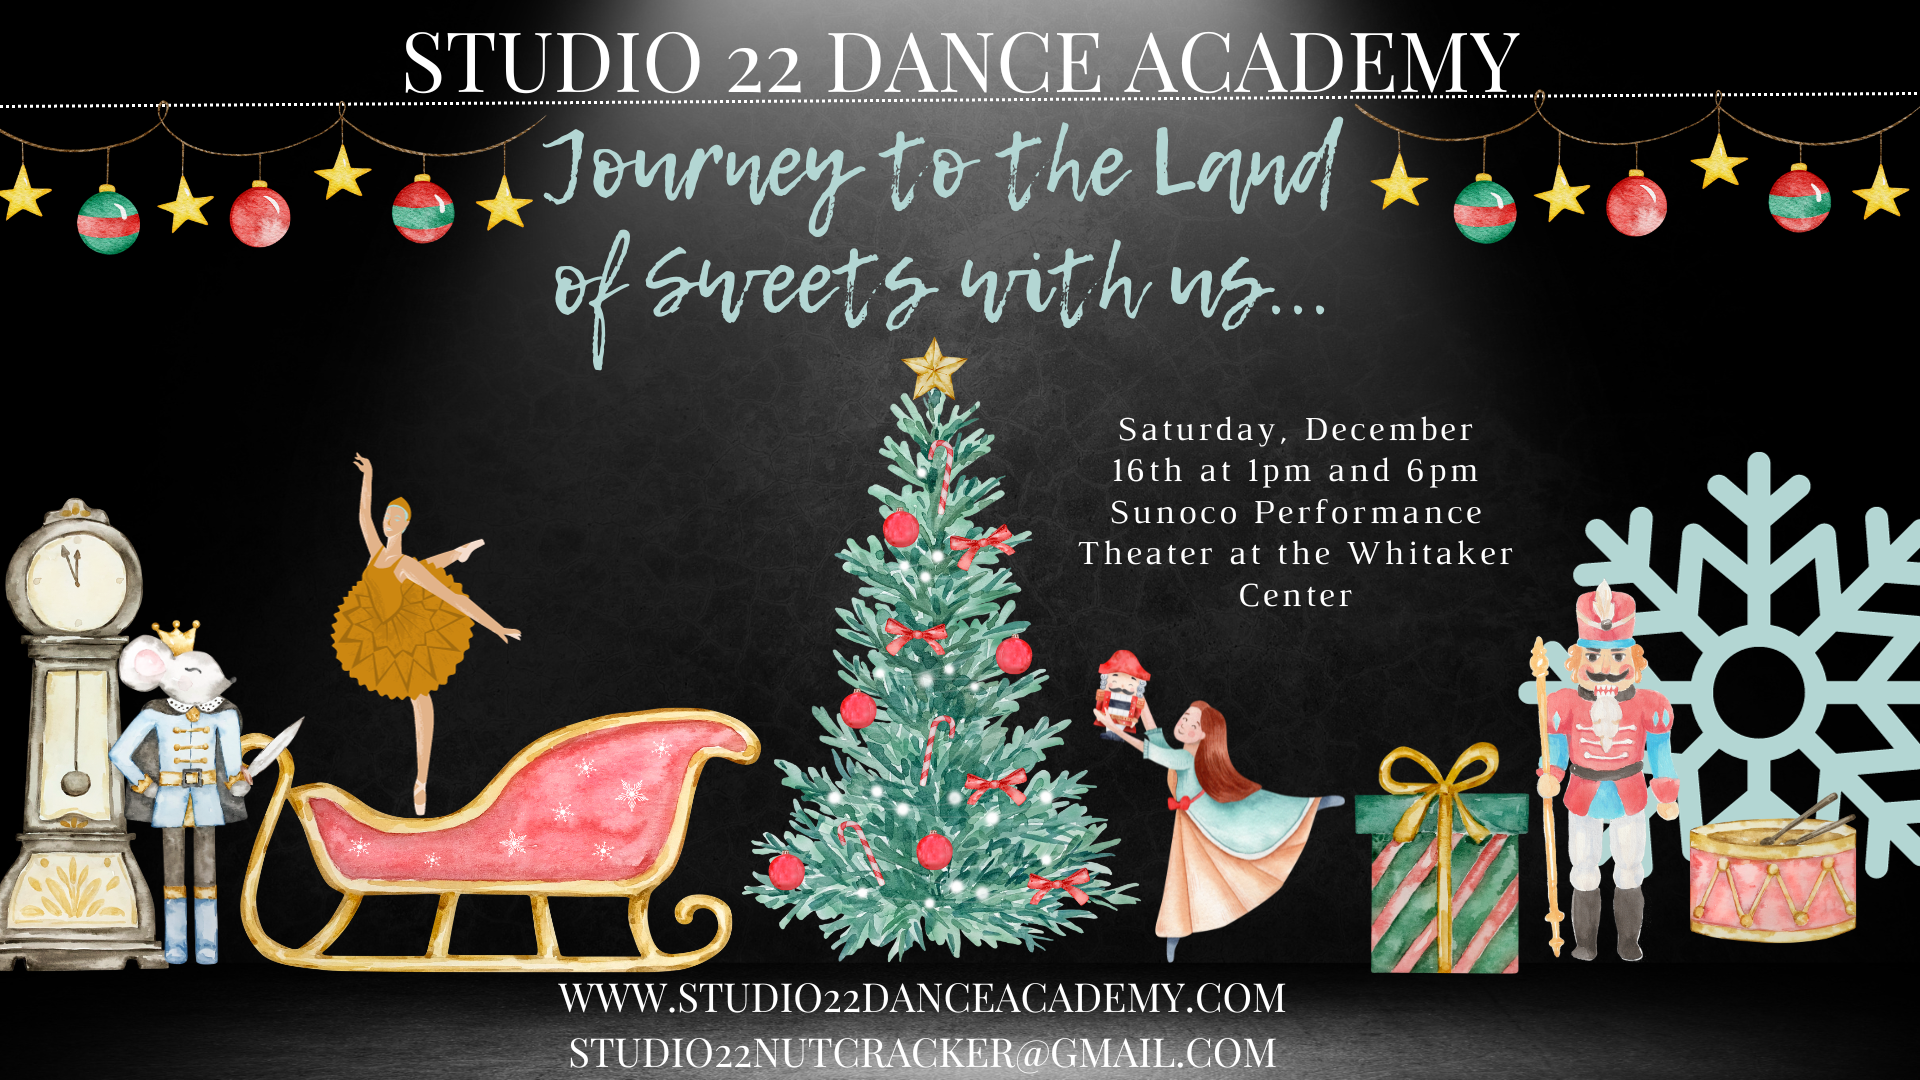 Studio 22 Dance Academy